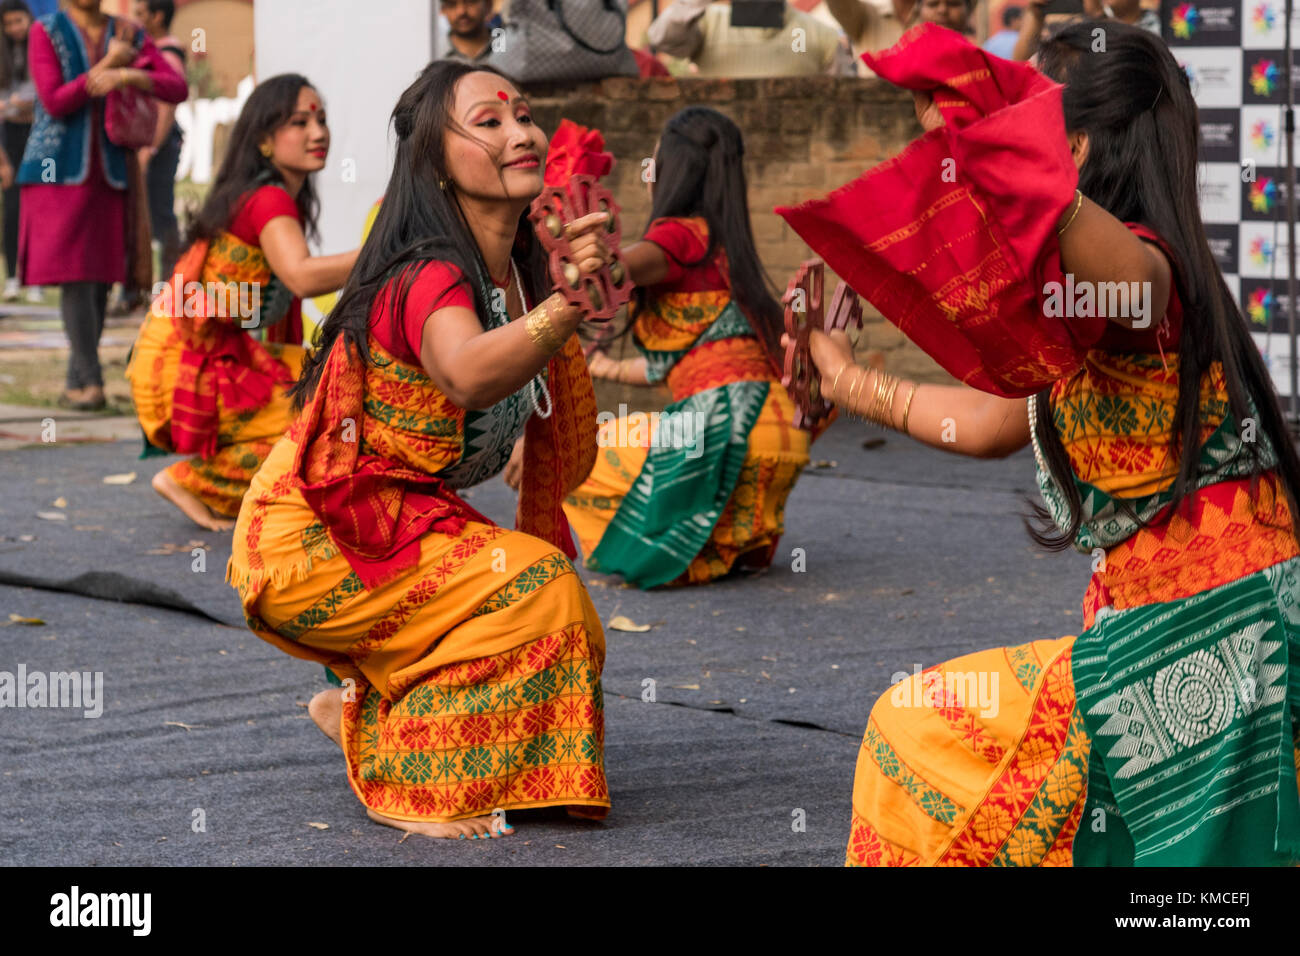 Un gruppo di ragazze da nord est membri dancing in una fila di indossare abiti etnici. Foto Stock